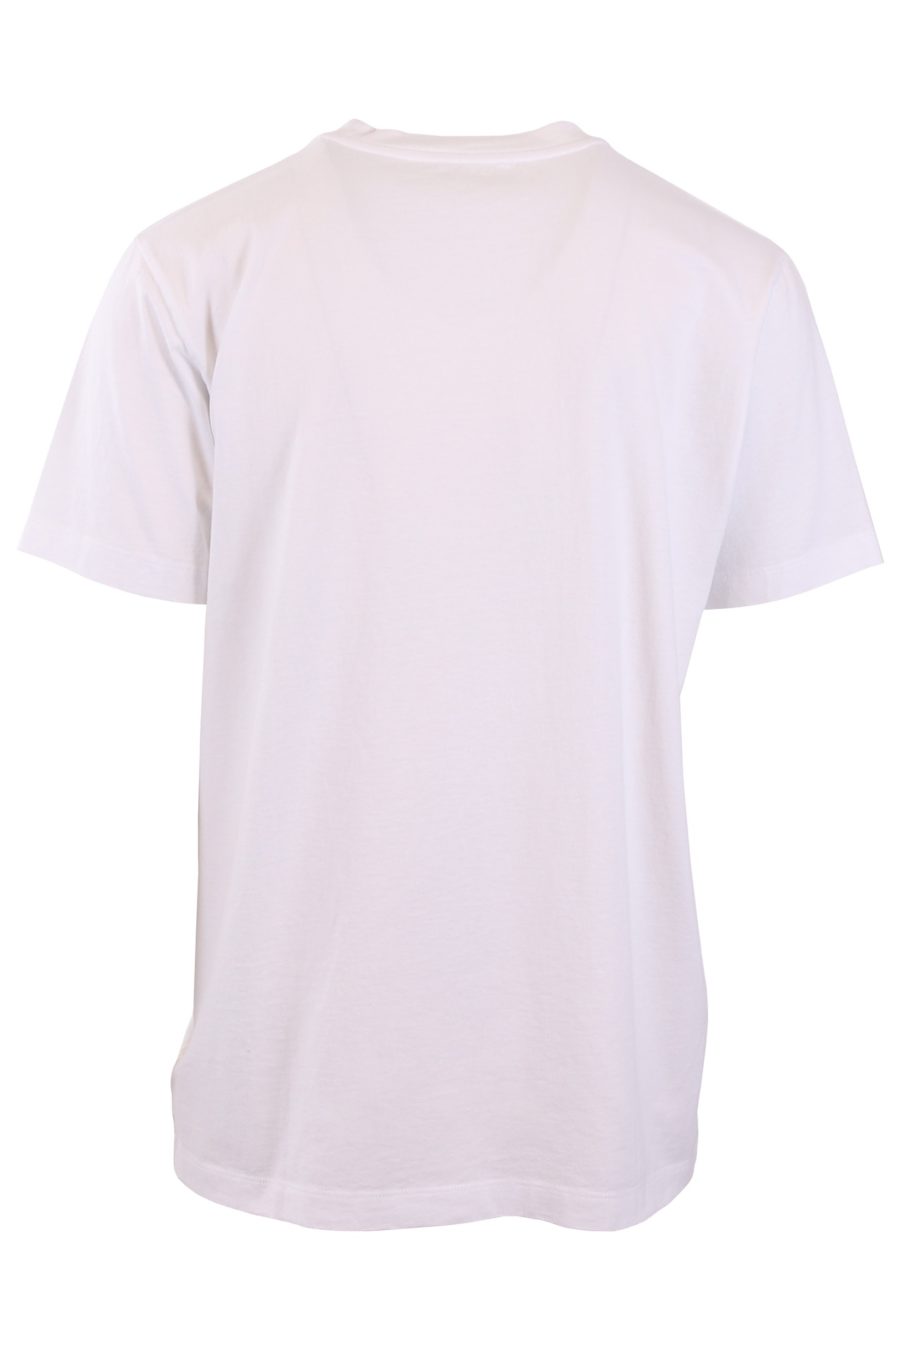 Camiseta Off-White blanca logo bordado - 431c85bfdecf1d0ad079dff5480e4353b93a0983